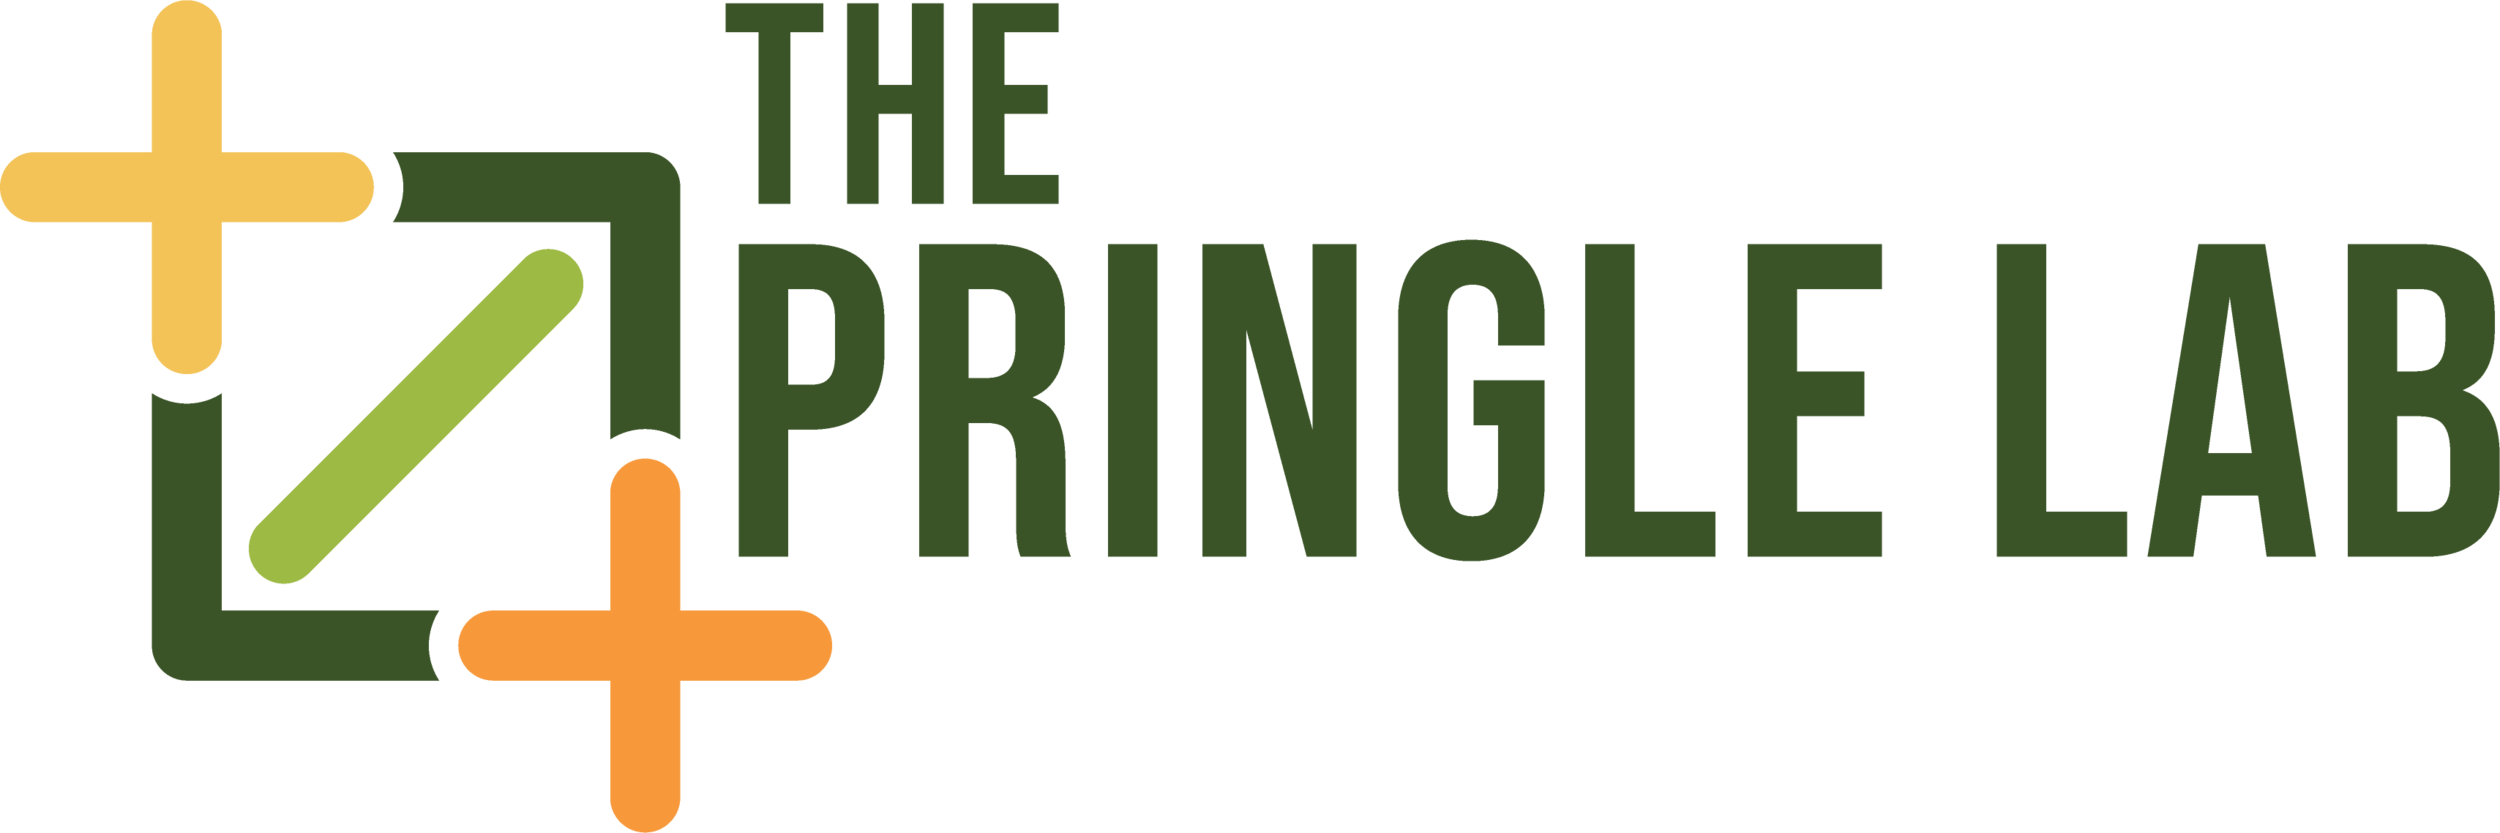 The Pringle Lab